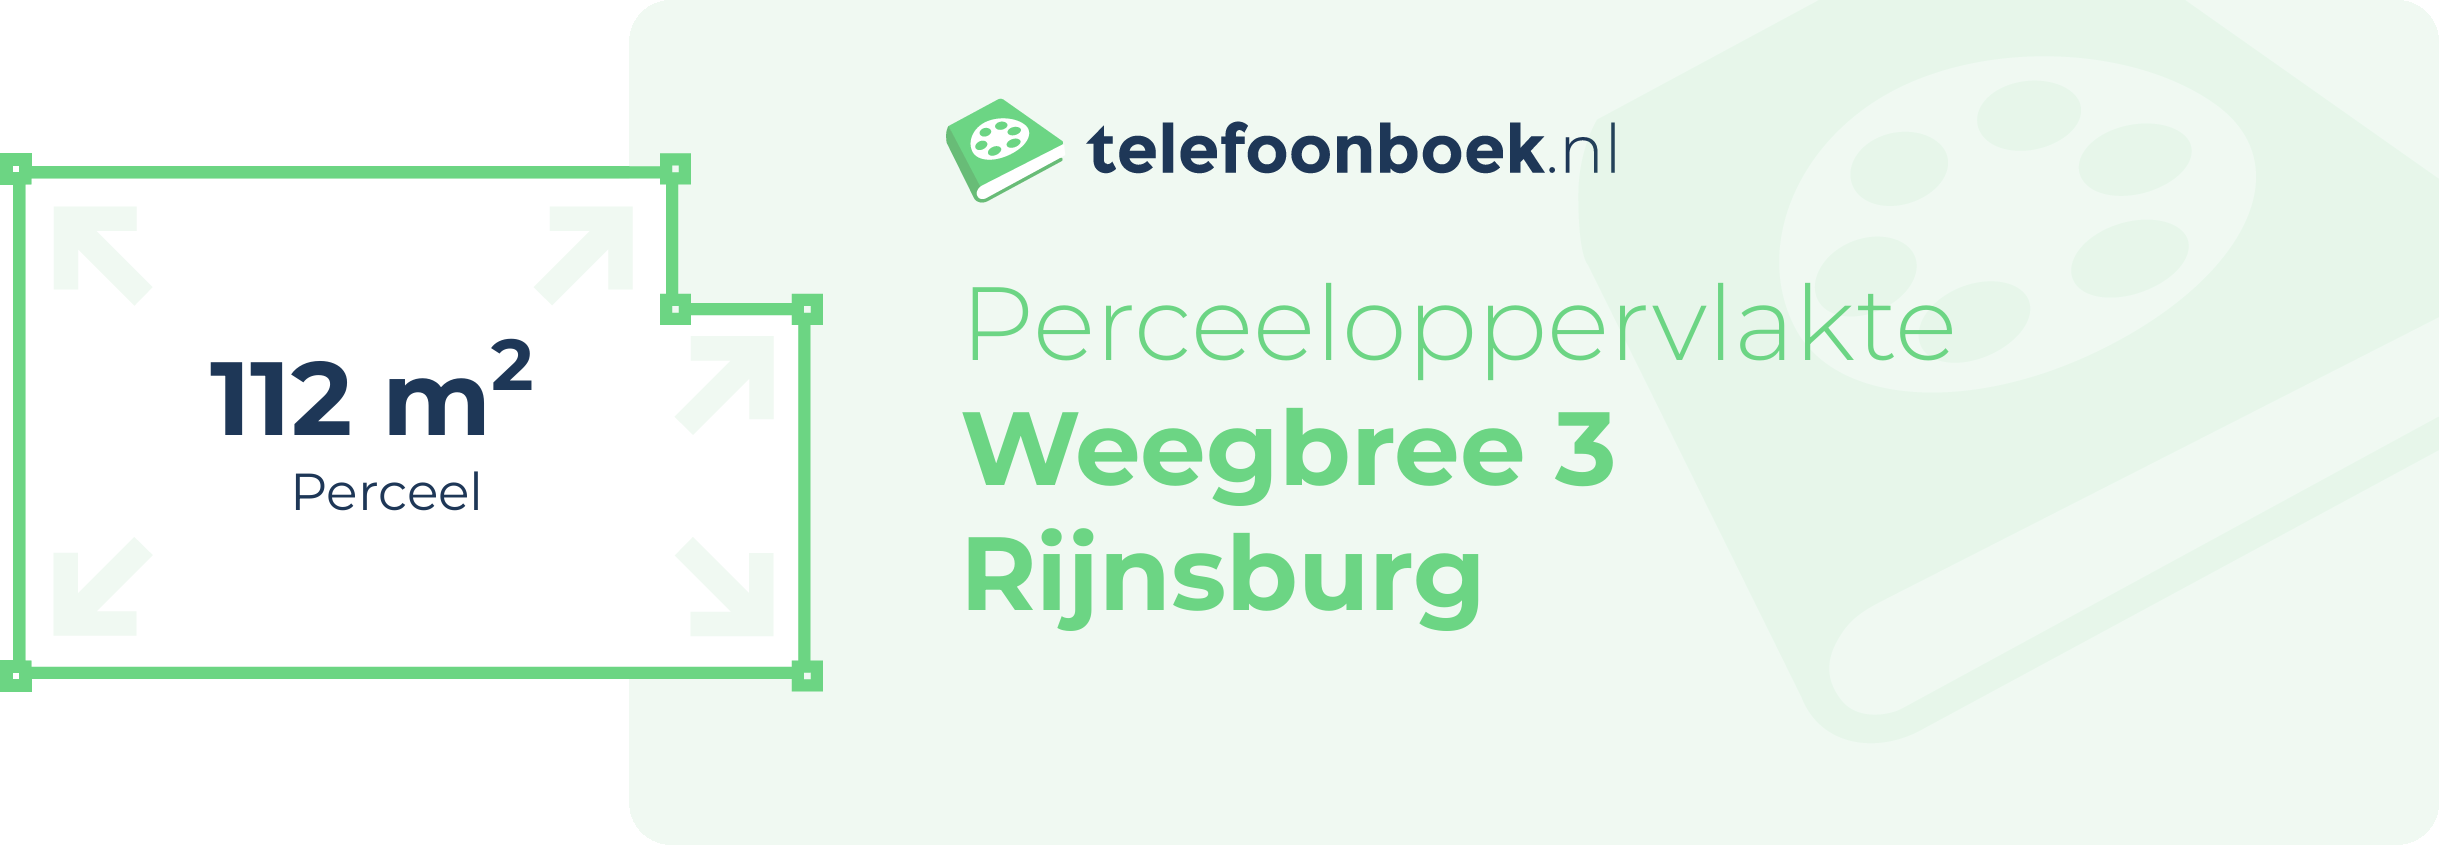 Perceeloppervlakte Weegbree 3 Rijnsburg